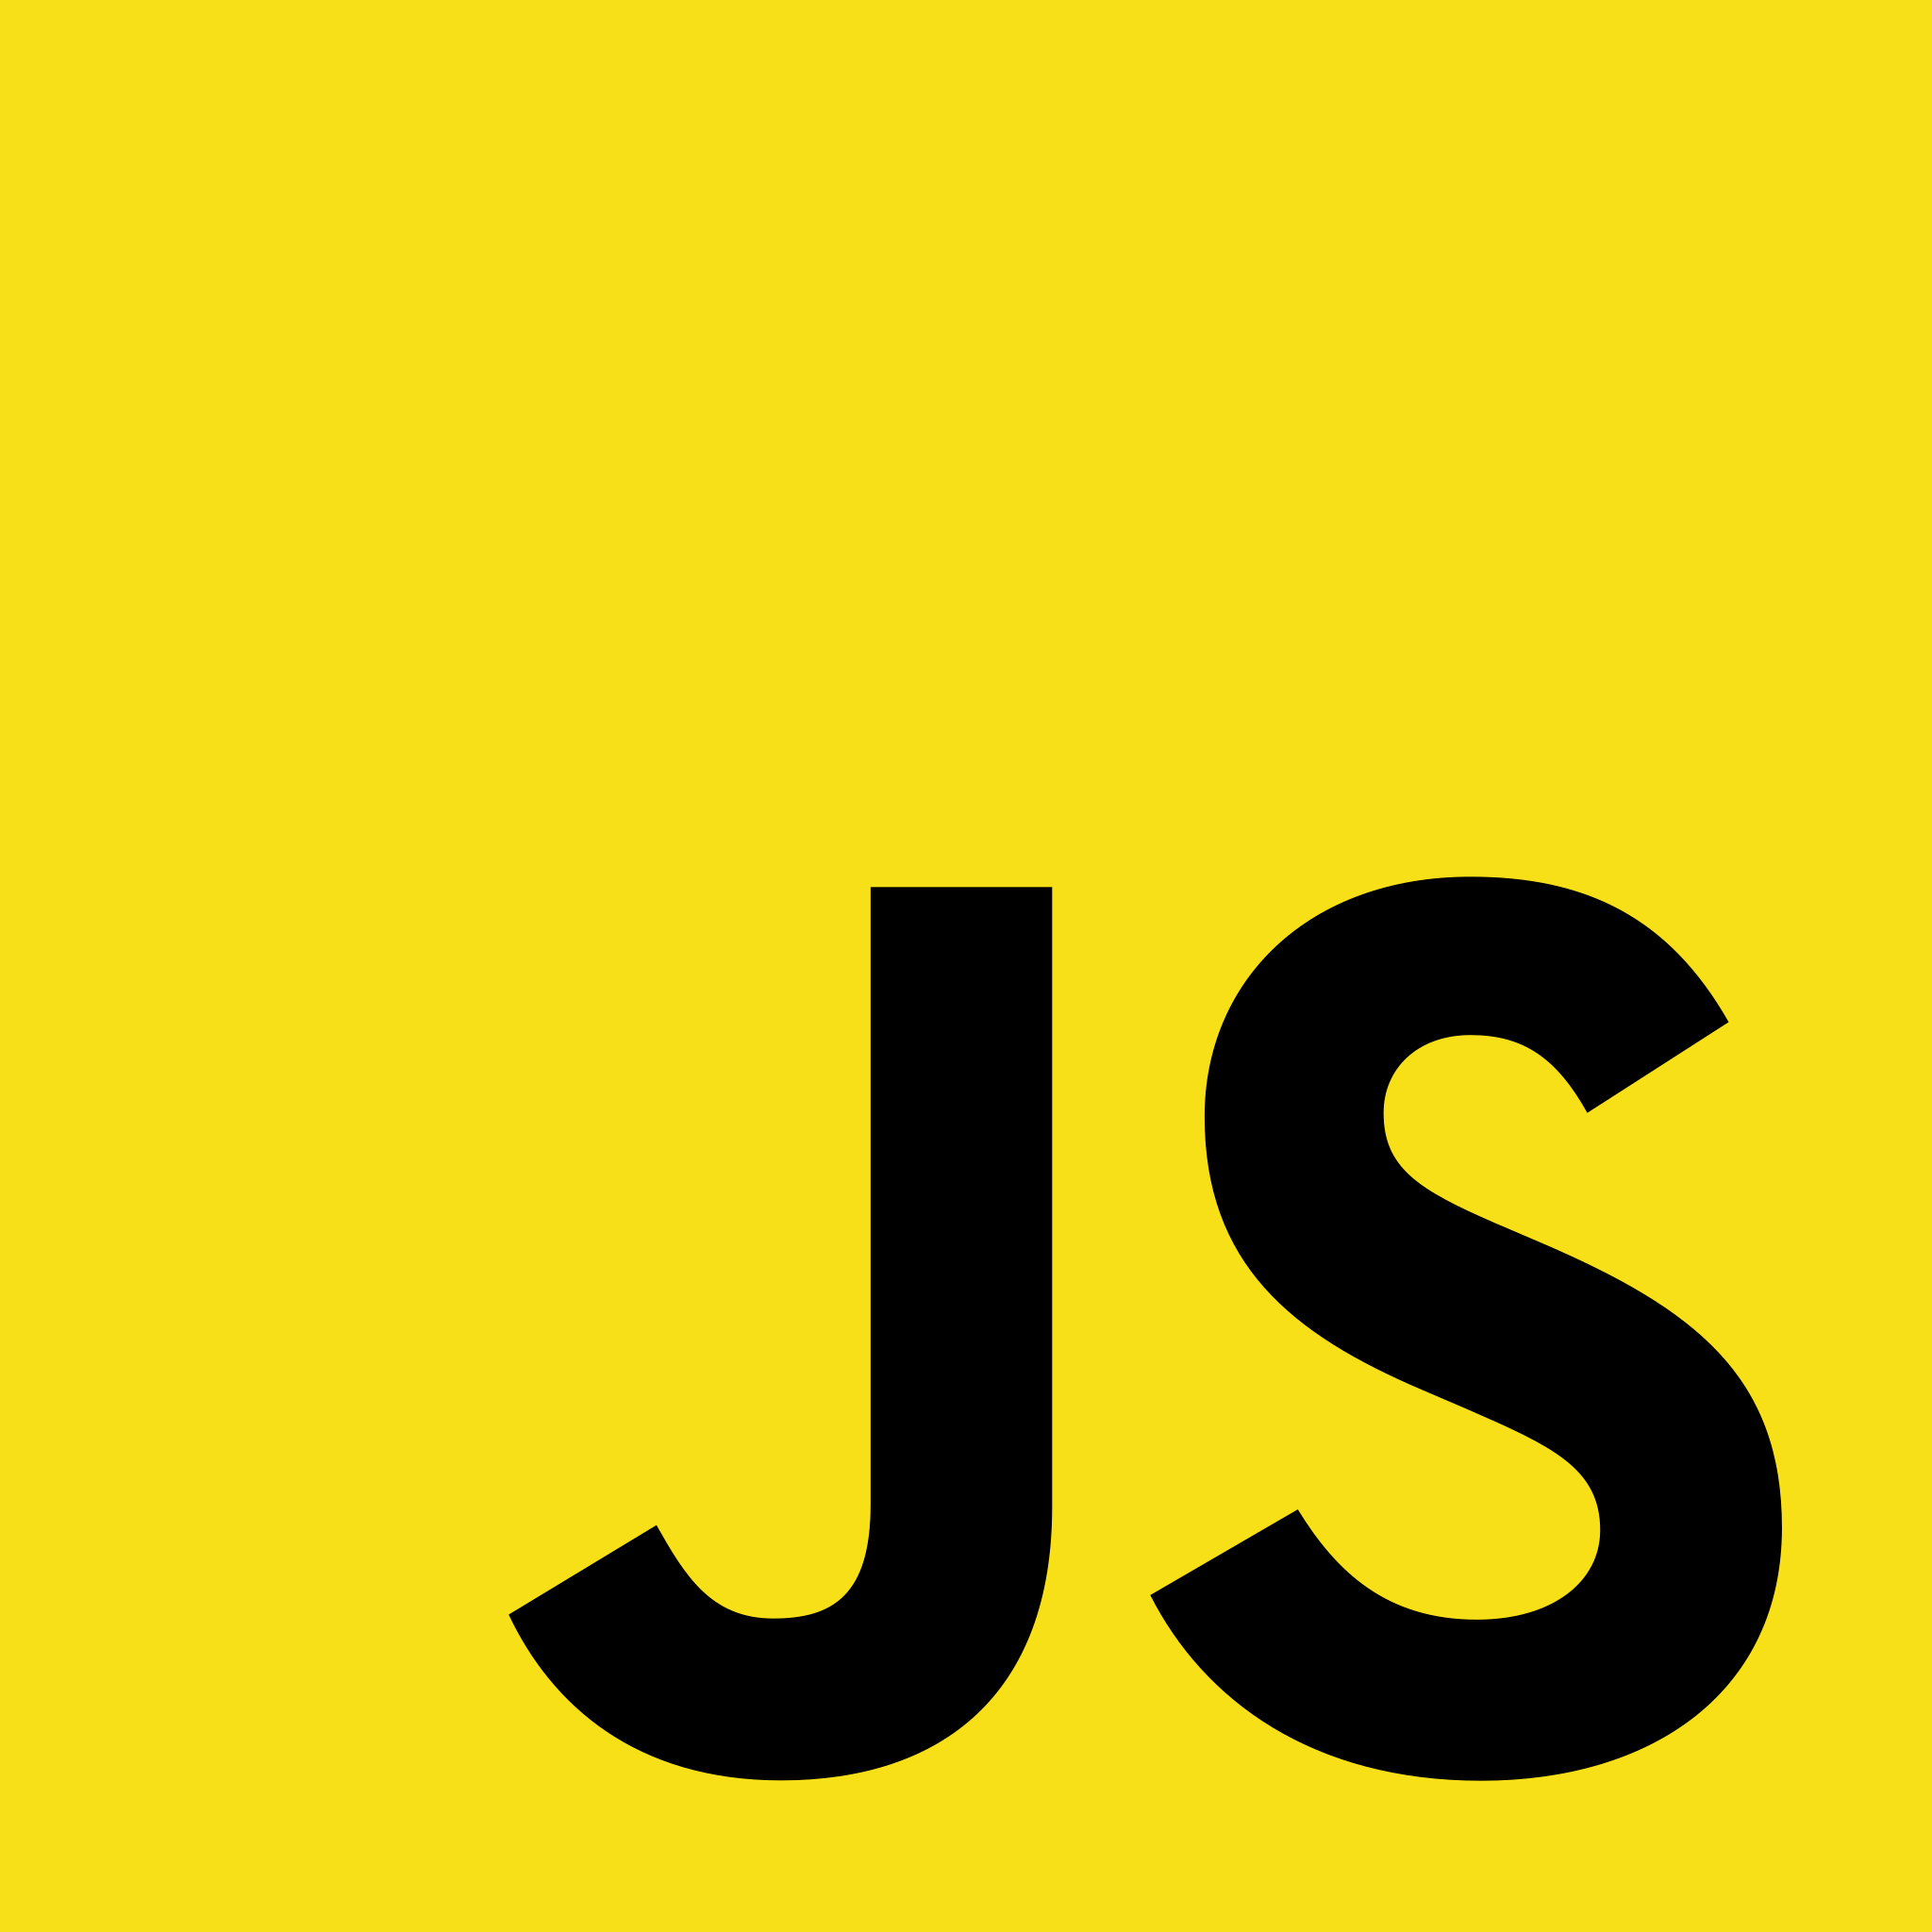 JavaScript popularity